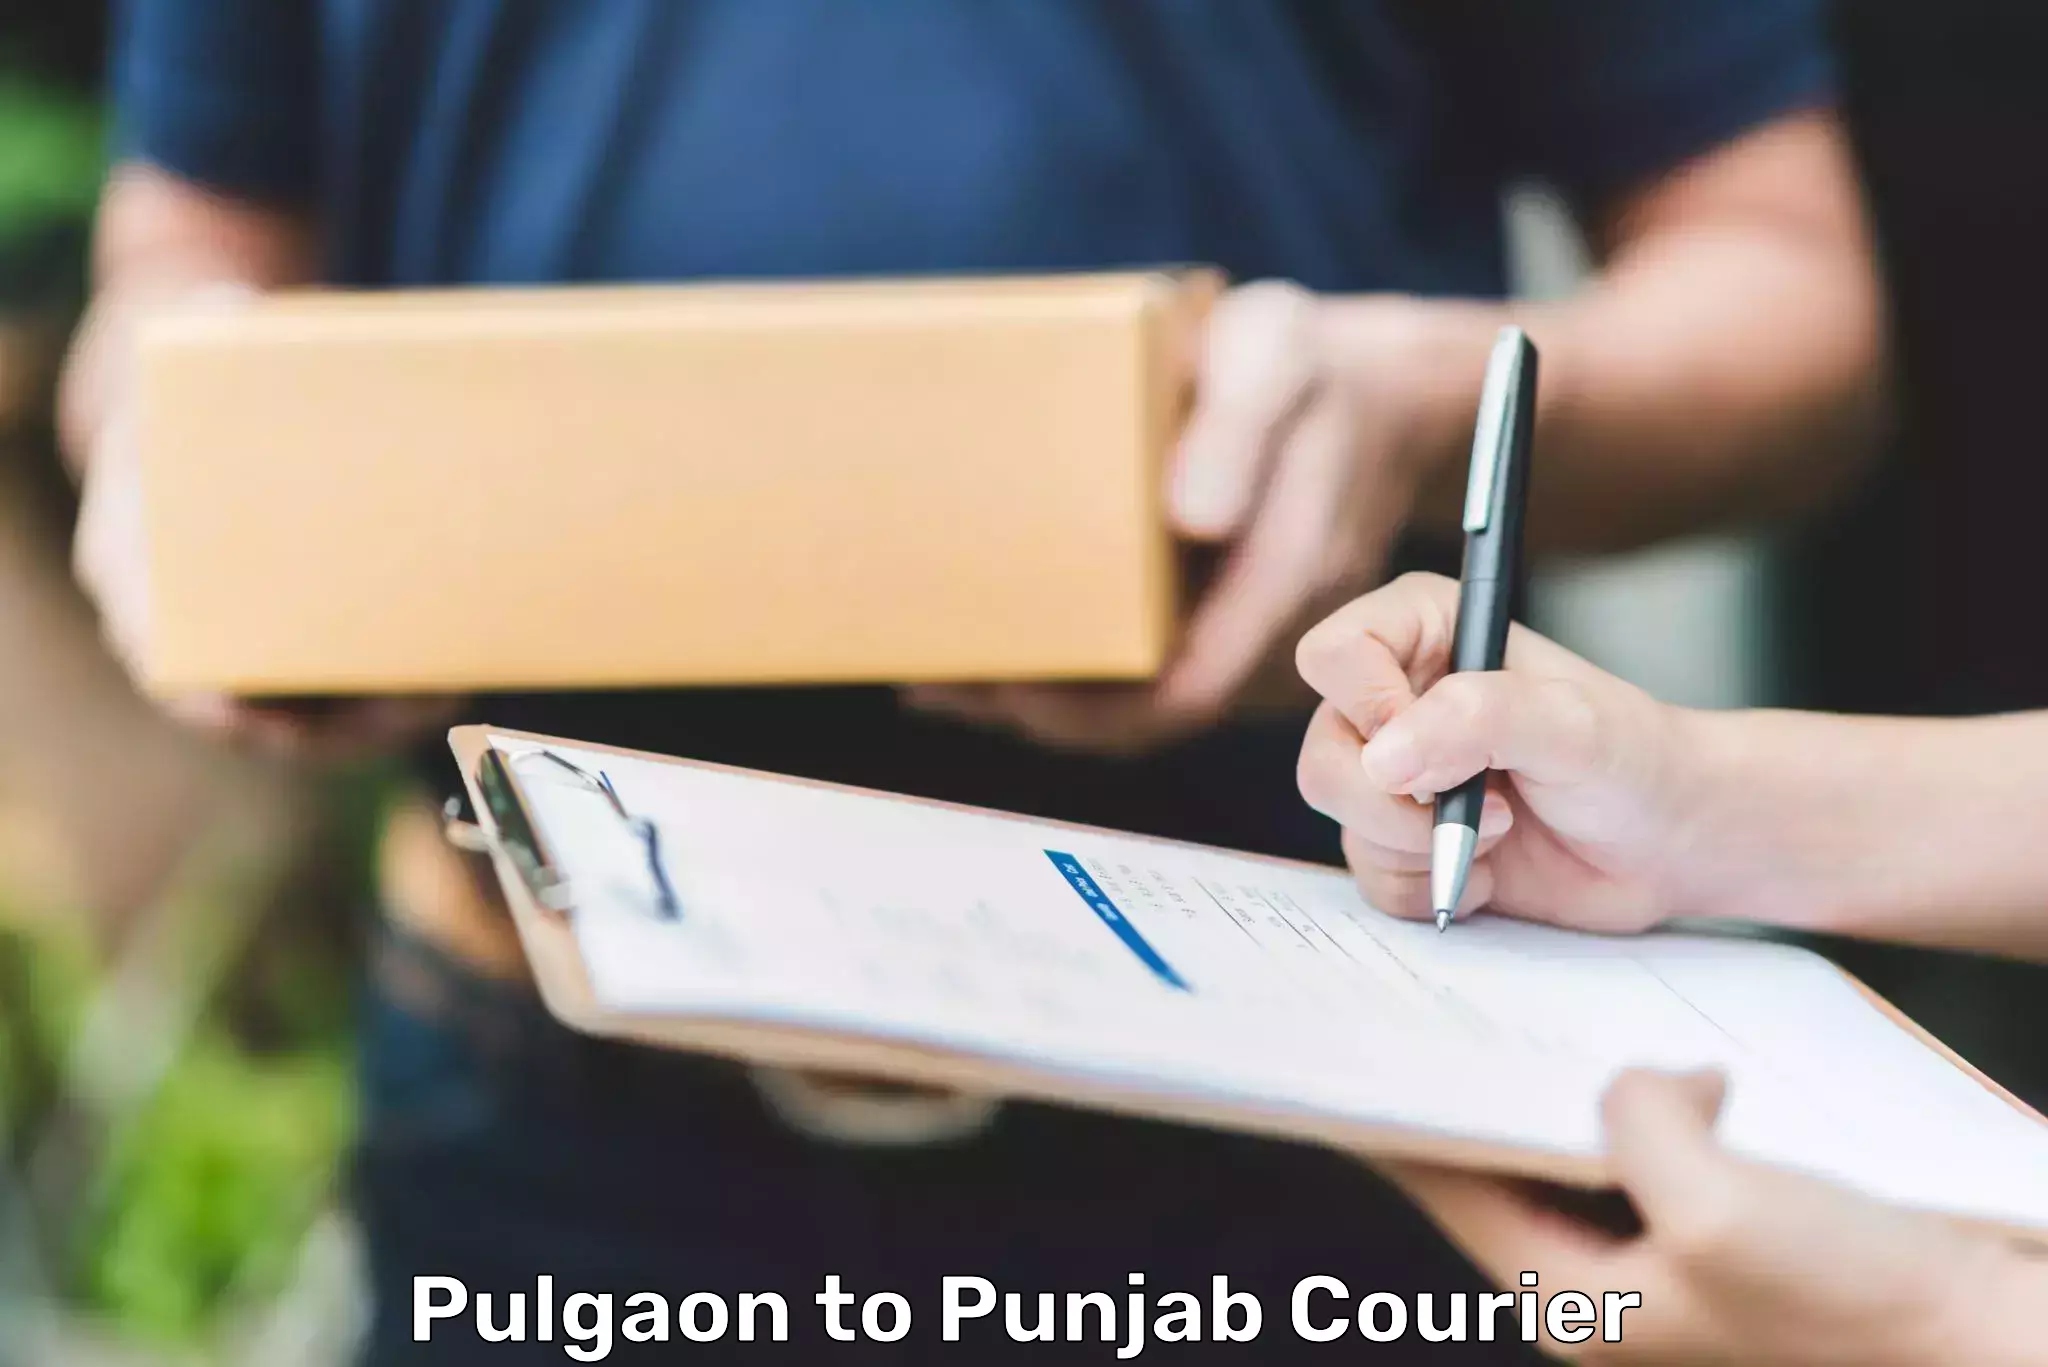 Courier service innovation Pulgaon to Abohar